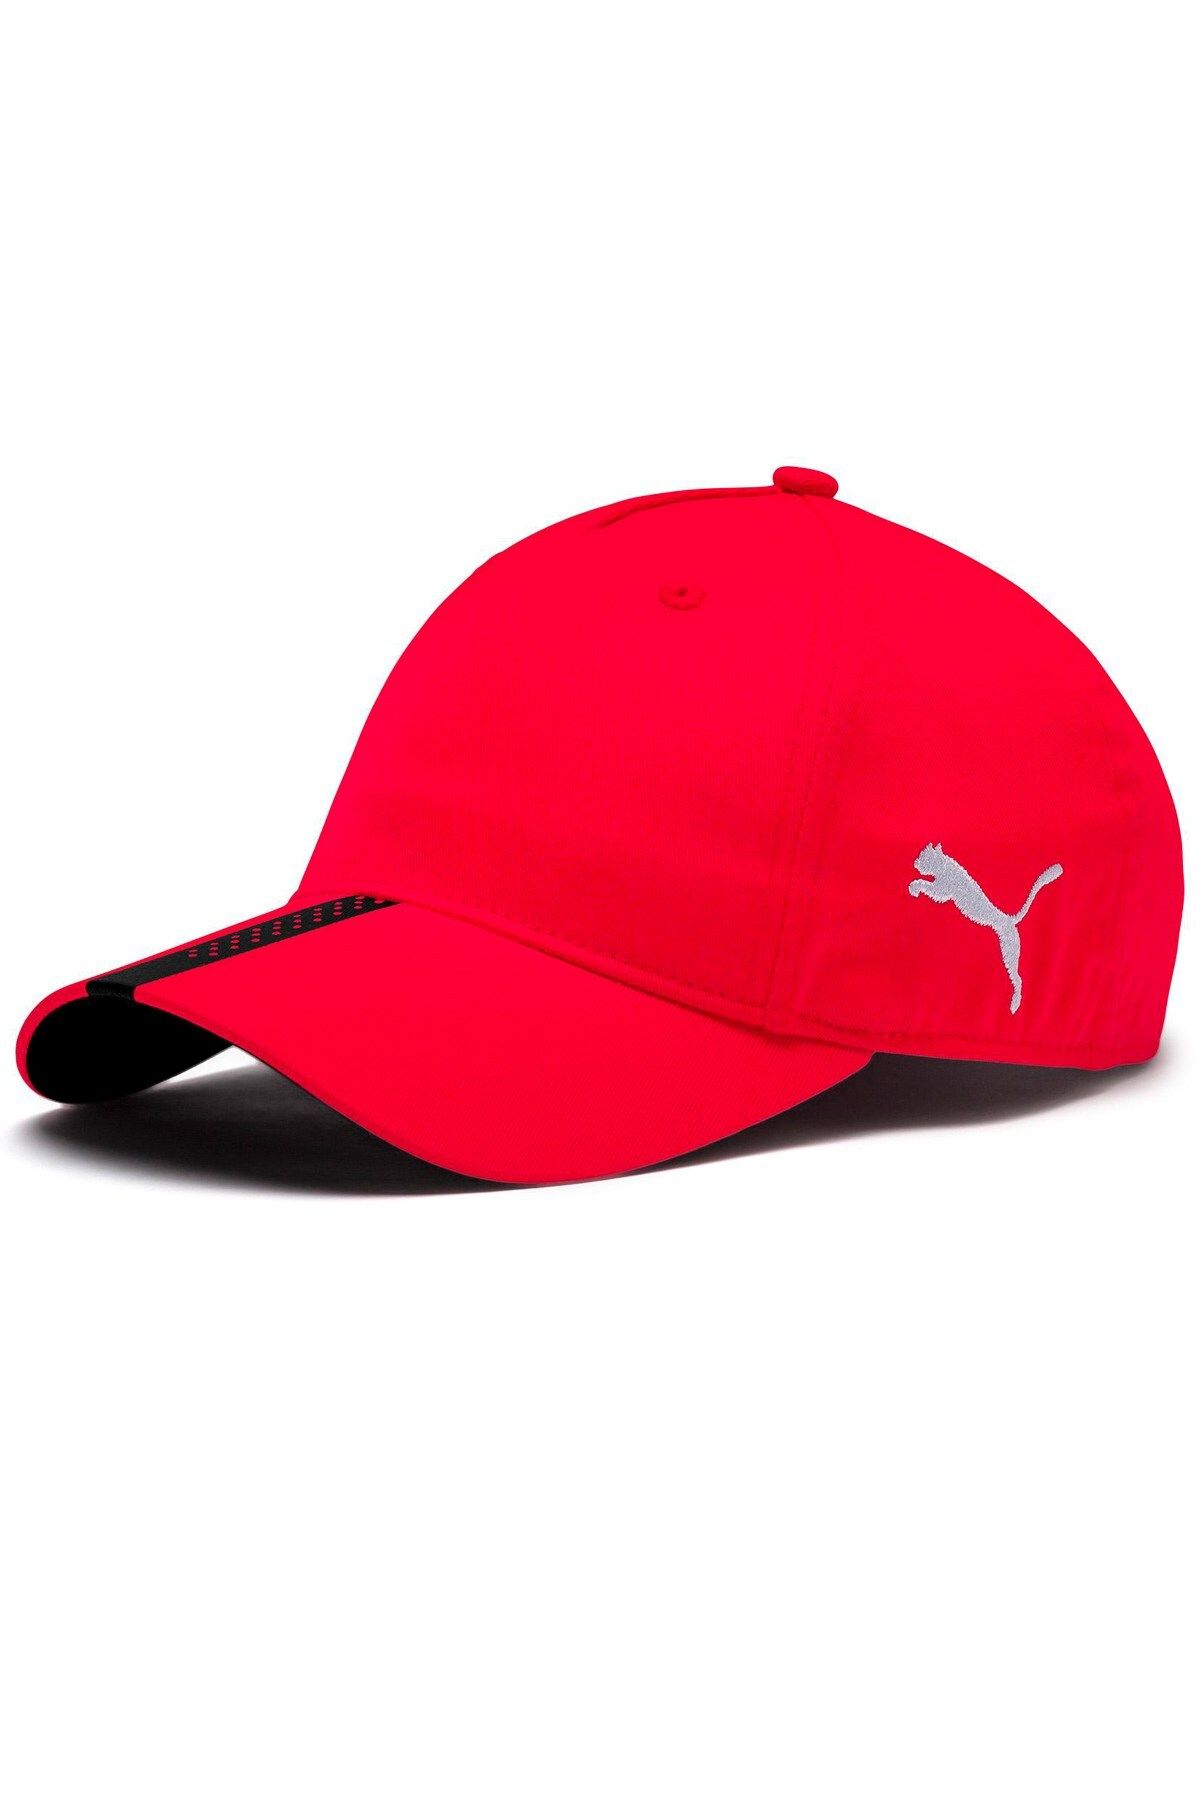 Puma Liga Cap Erkek Şapka 02235601